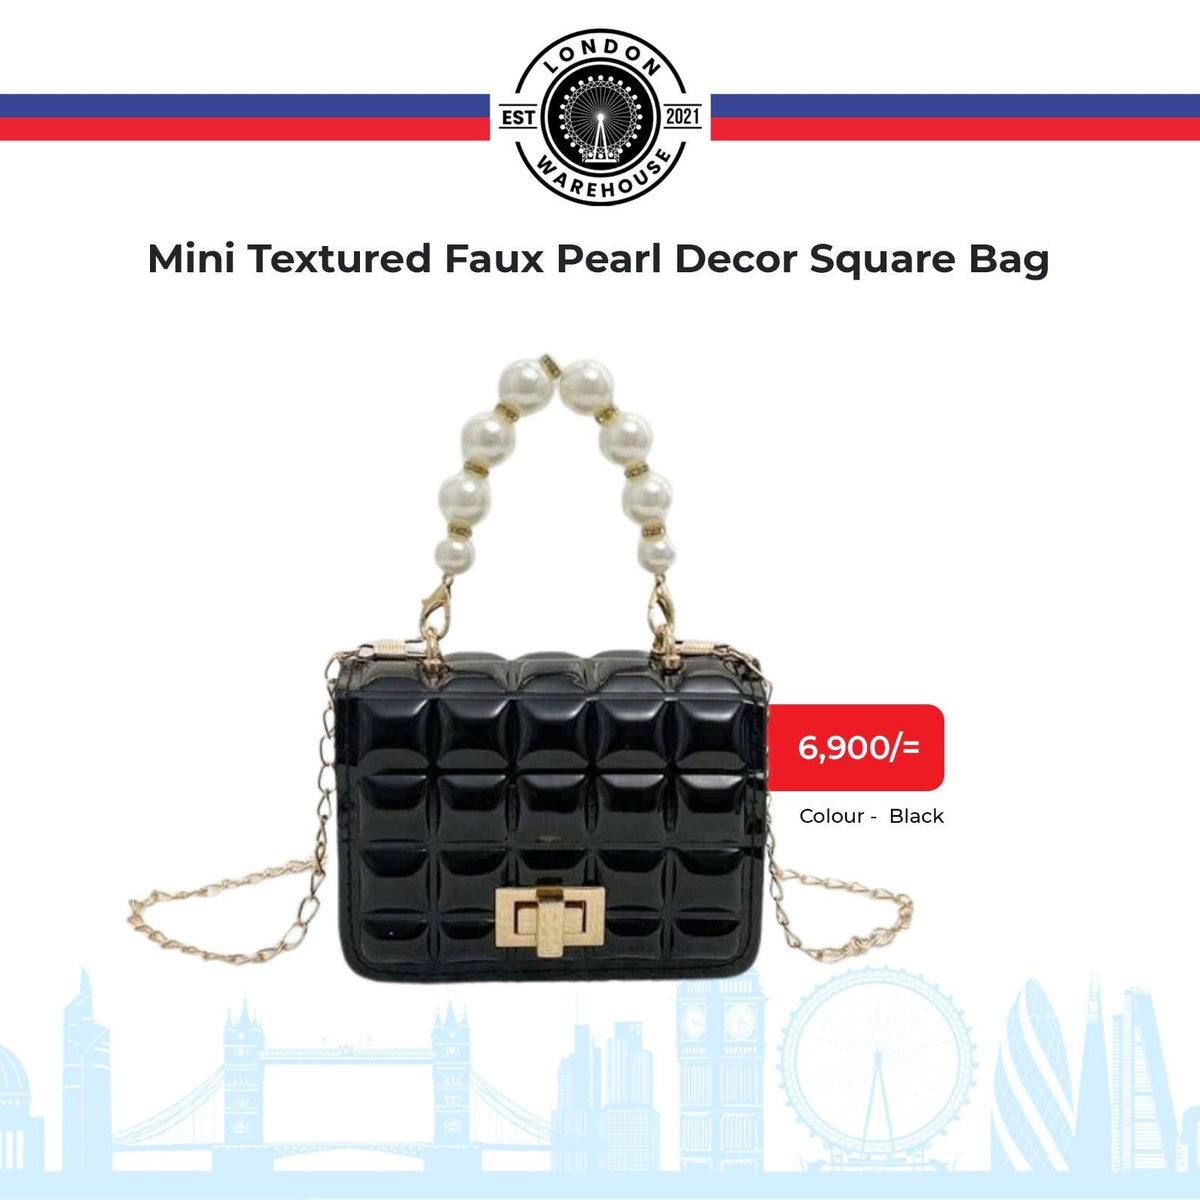 Textured Faux Pearl Decor Square Bag